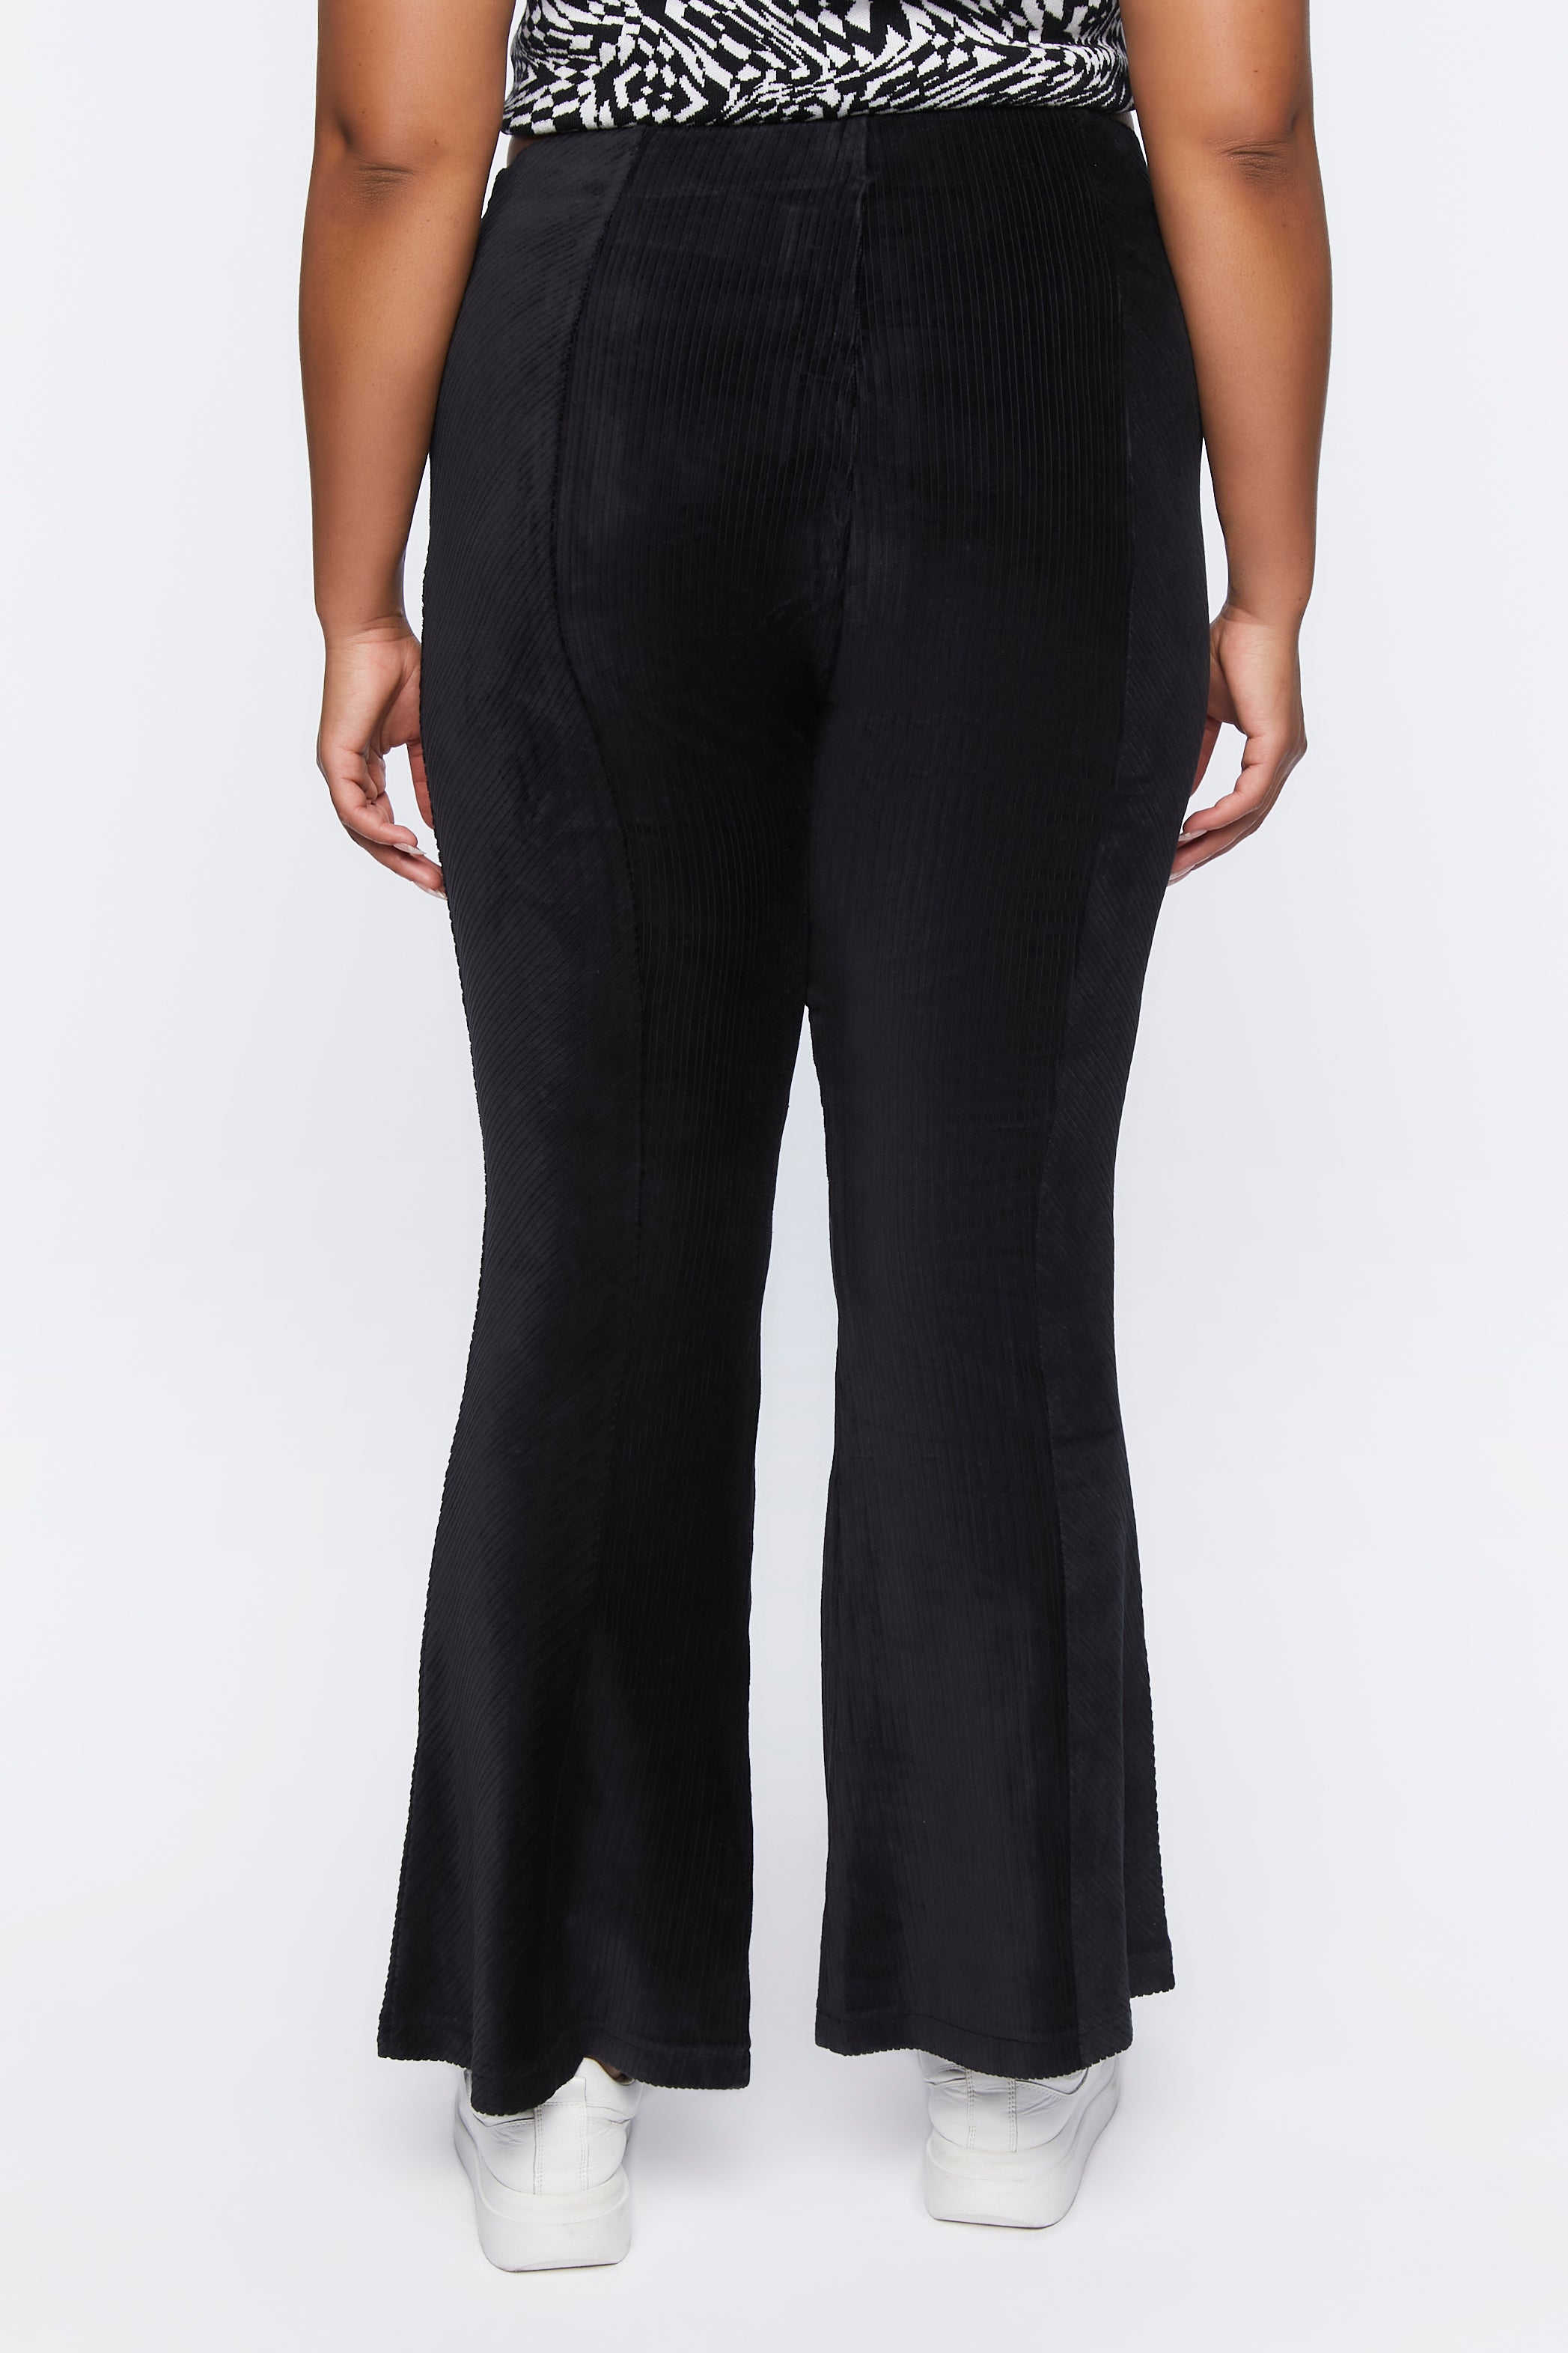 Black Plus Size Corduroy Flare Pants 3